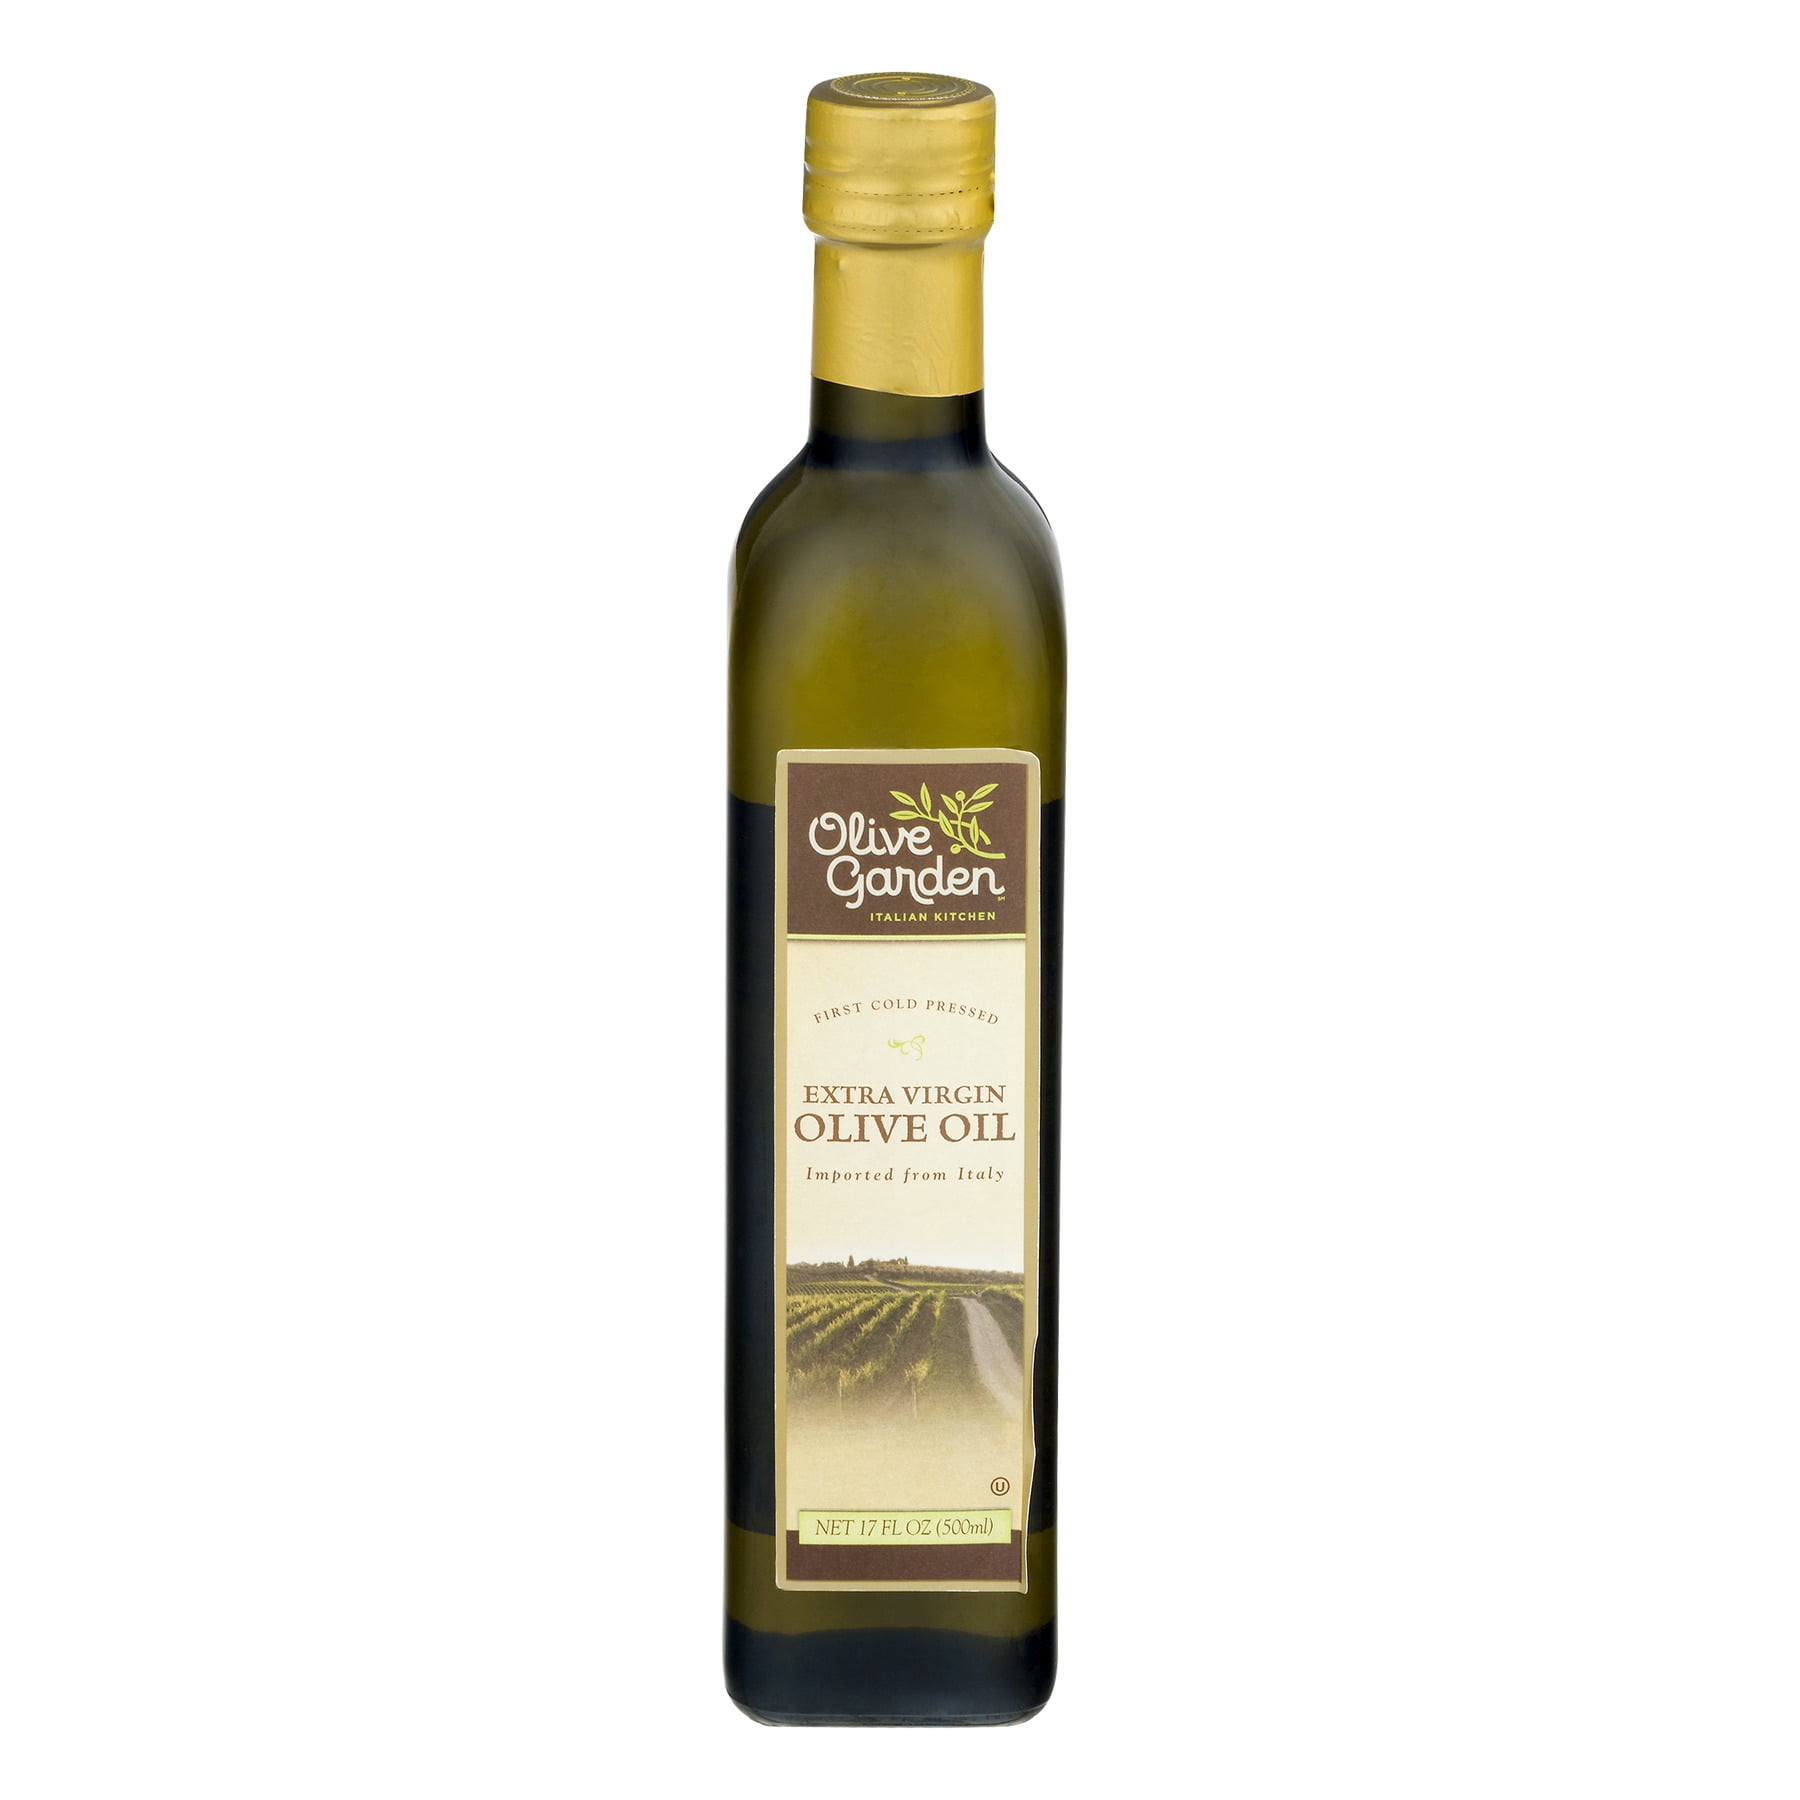 Olive Garden Extra Virgin Olive Oil, 17.0 FL OZ - Walmart.com - Walmart.com